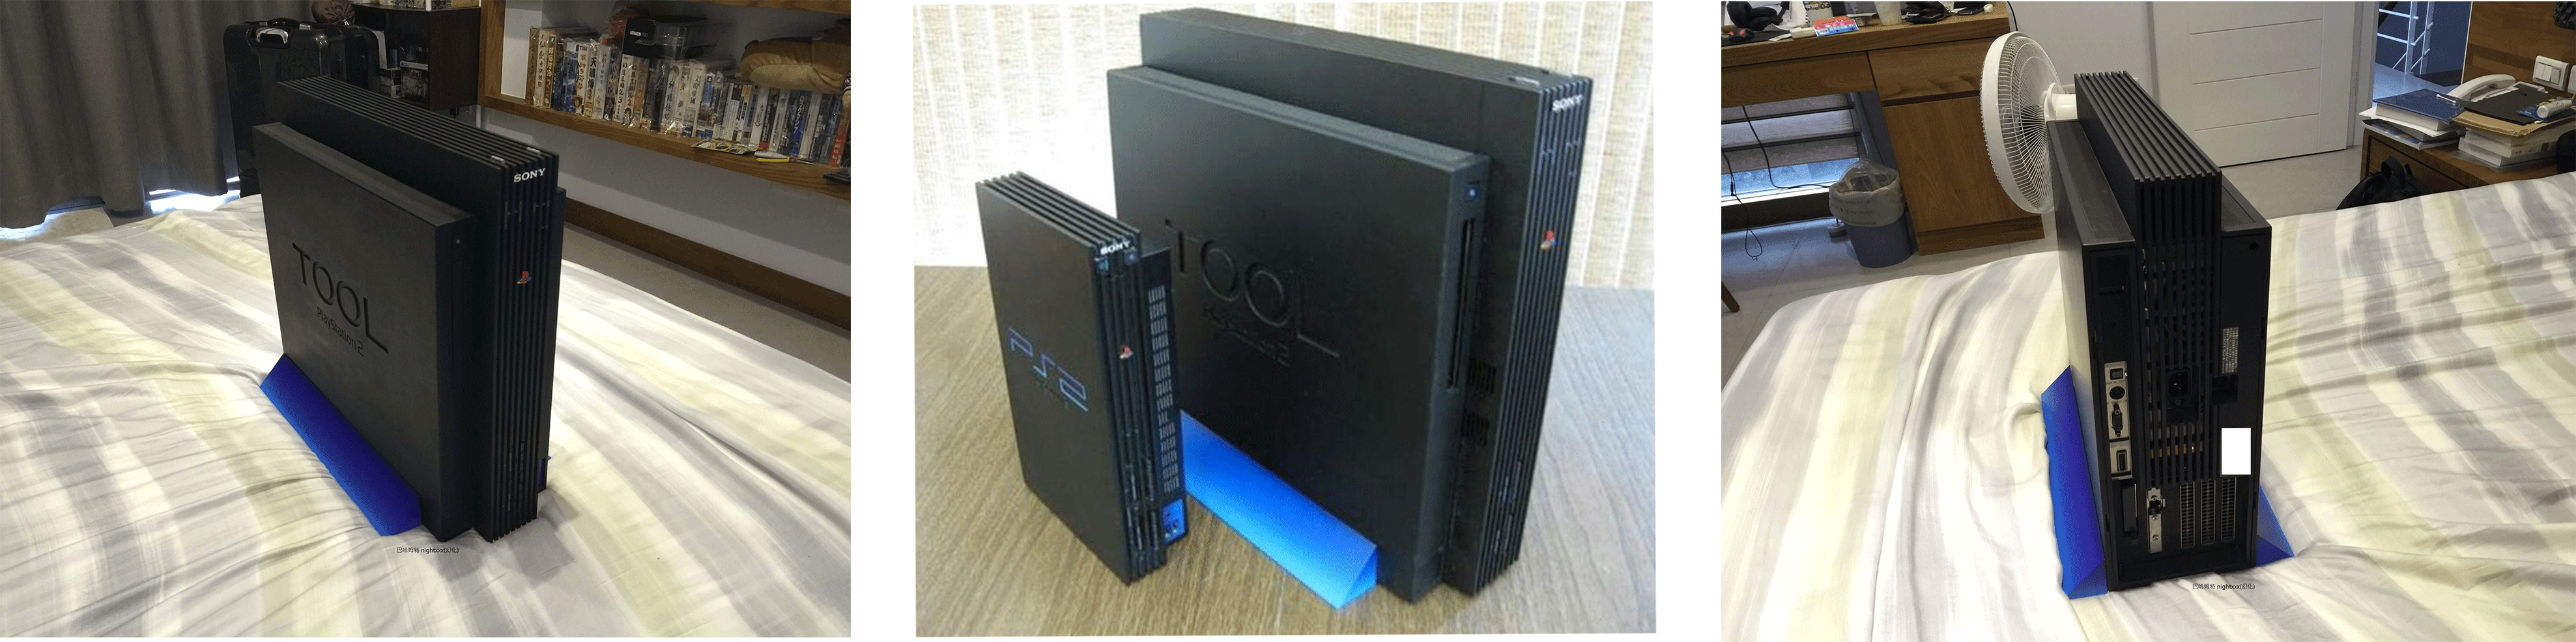 PS2开发机和原版PS2对比图，体积相当大